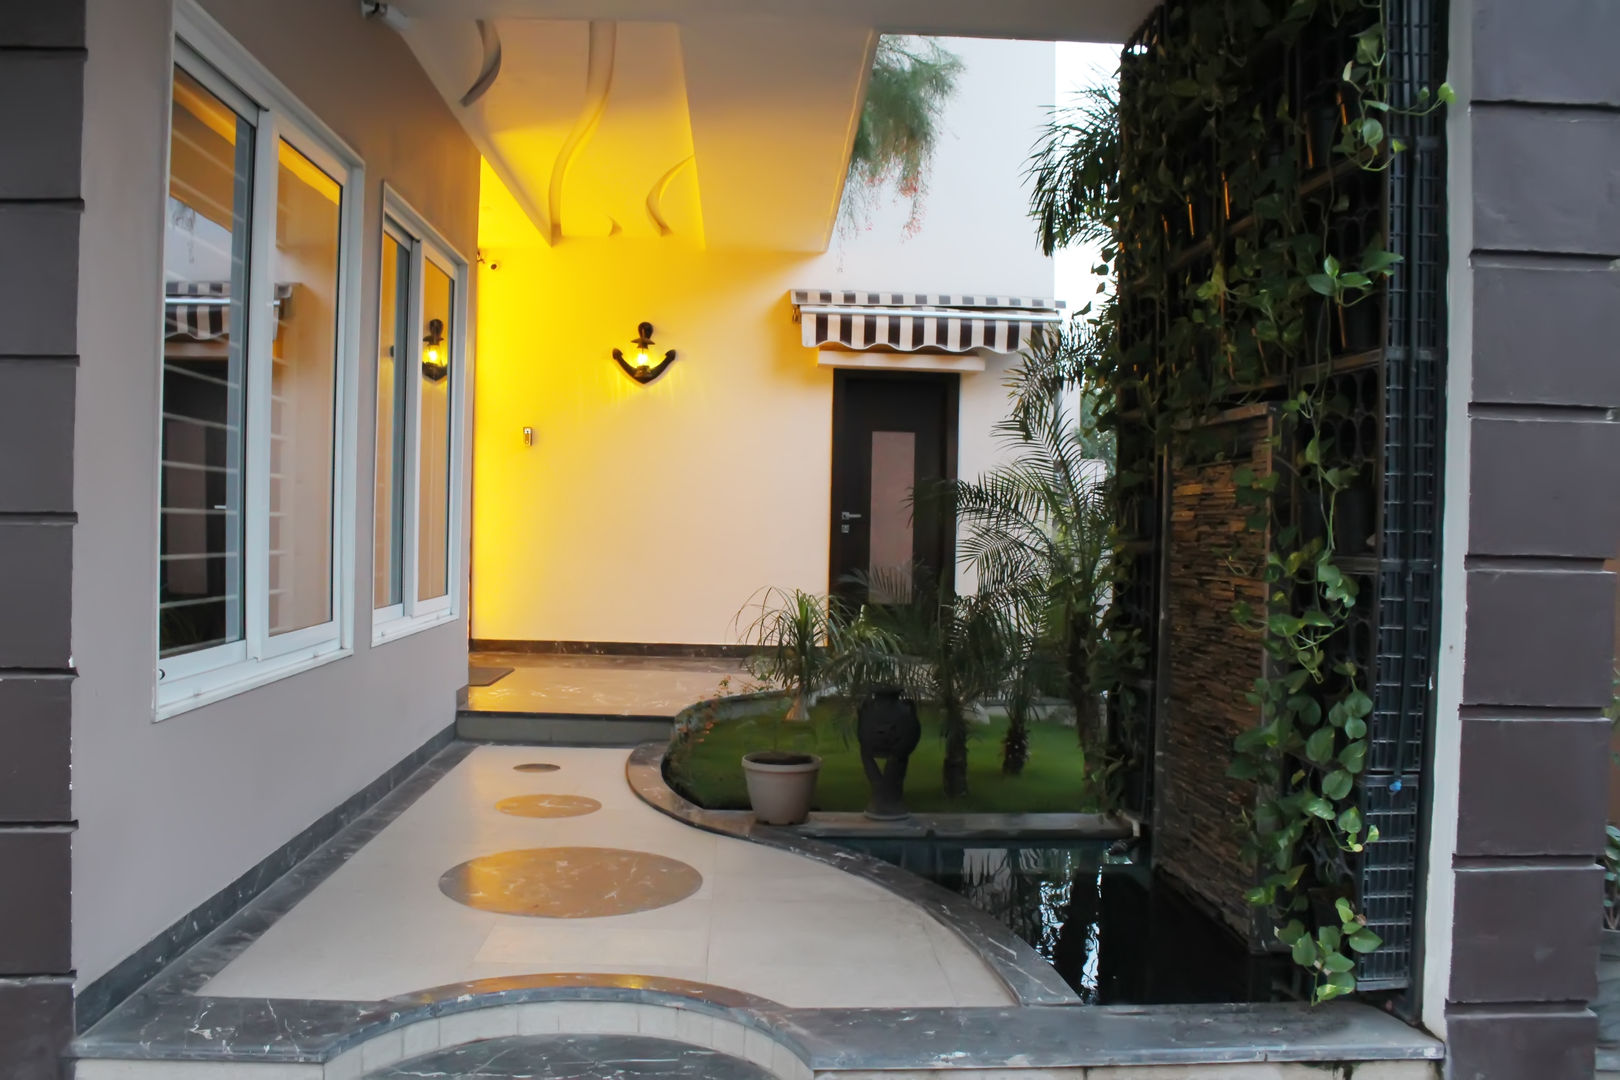 Duplex at Indore, Shadab Anwari & Associates. Shadab Anwari & Associates. Asian style garden